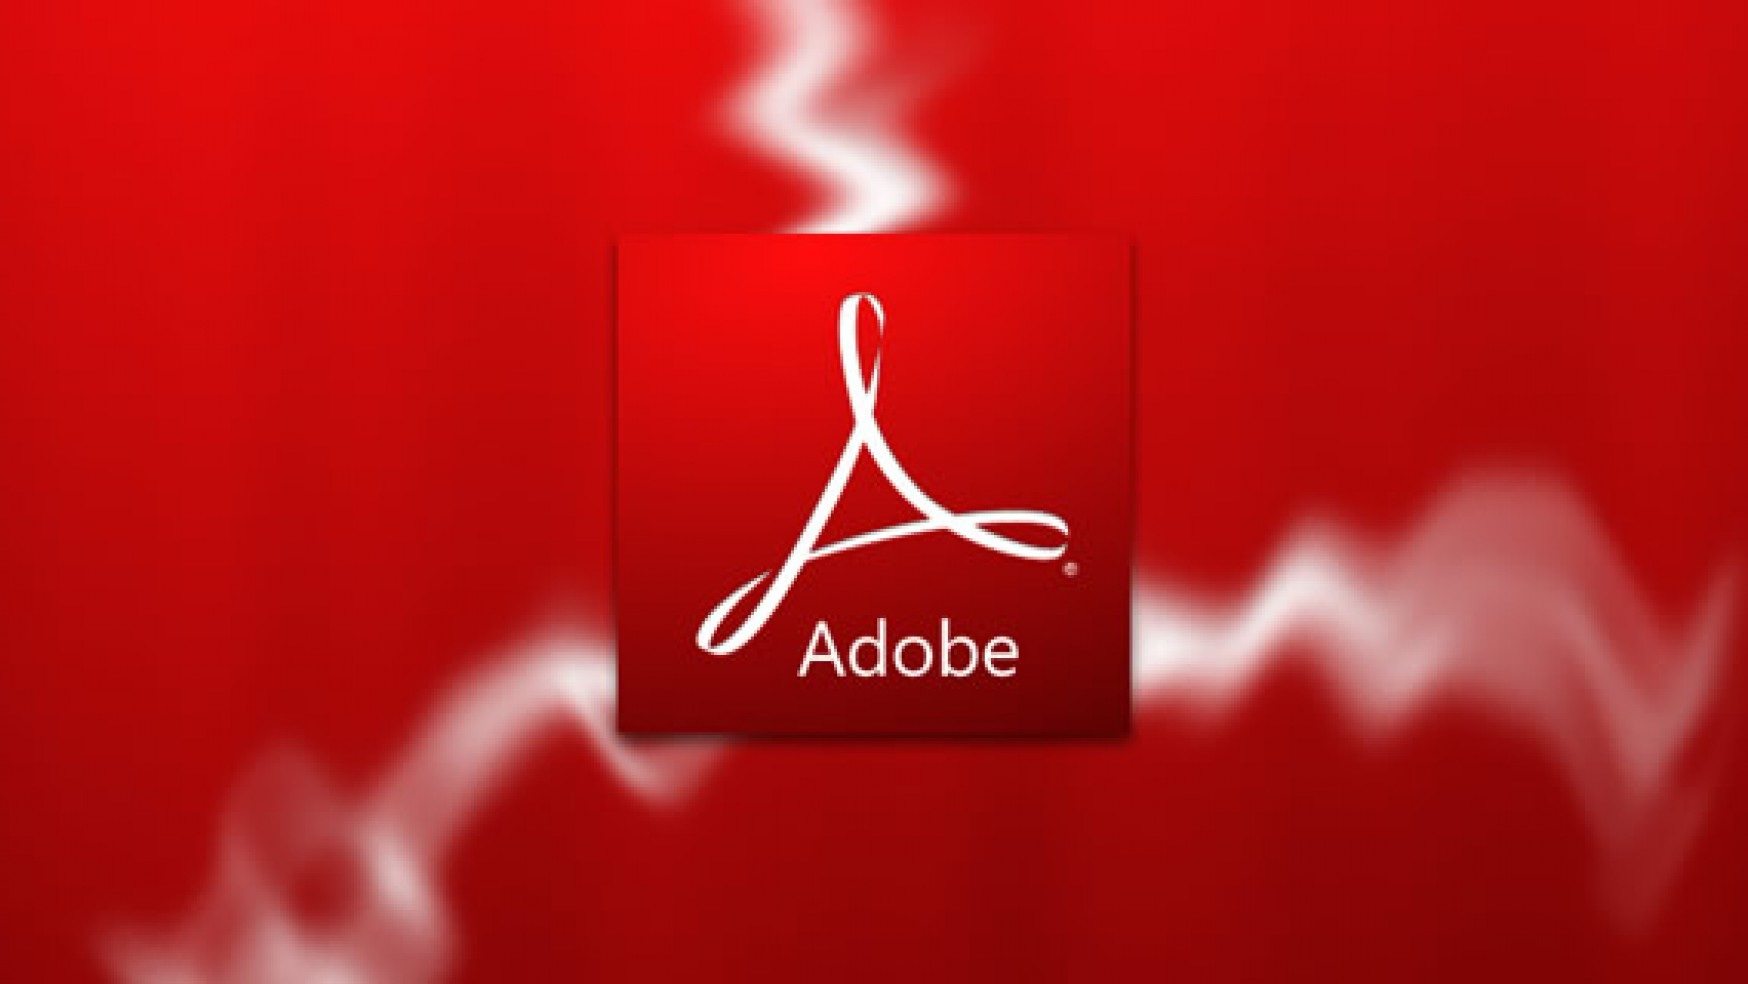 Adobe Flash Player Mac For Mac 10.7.5